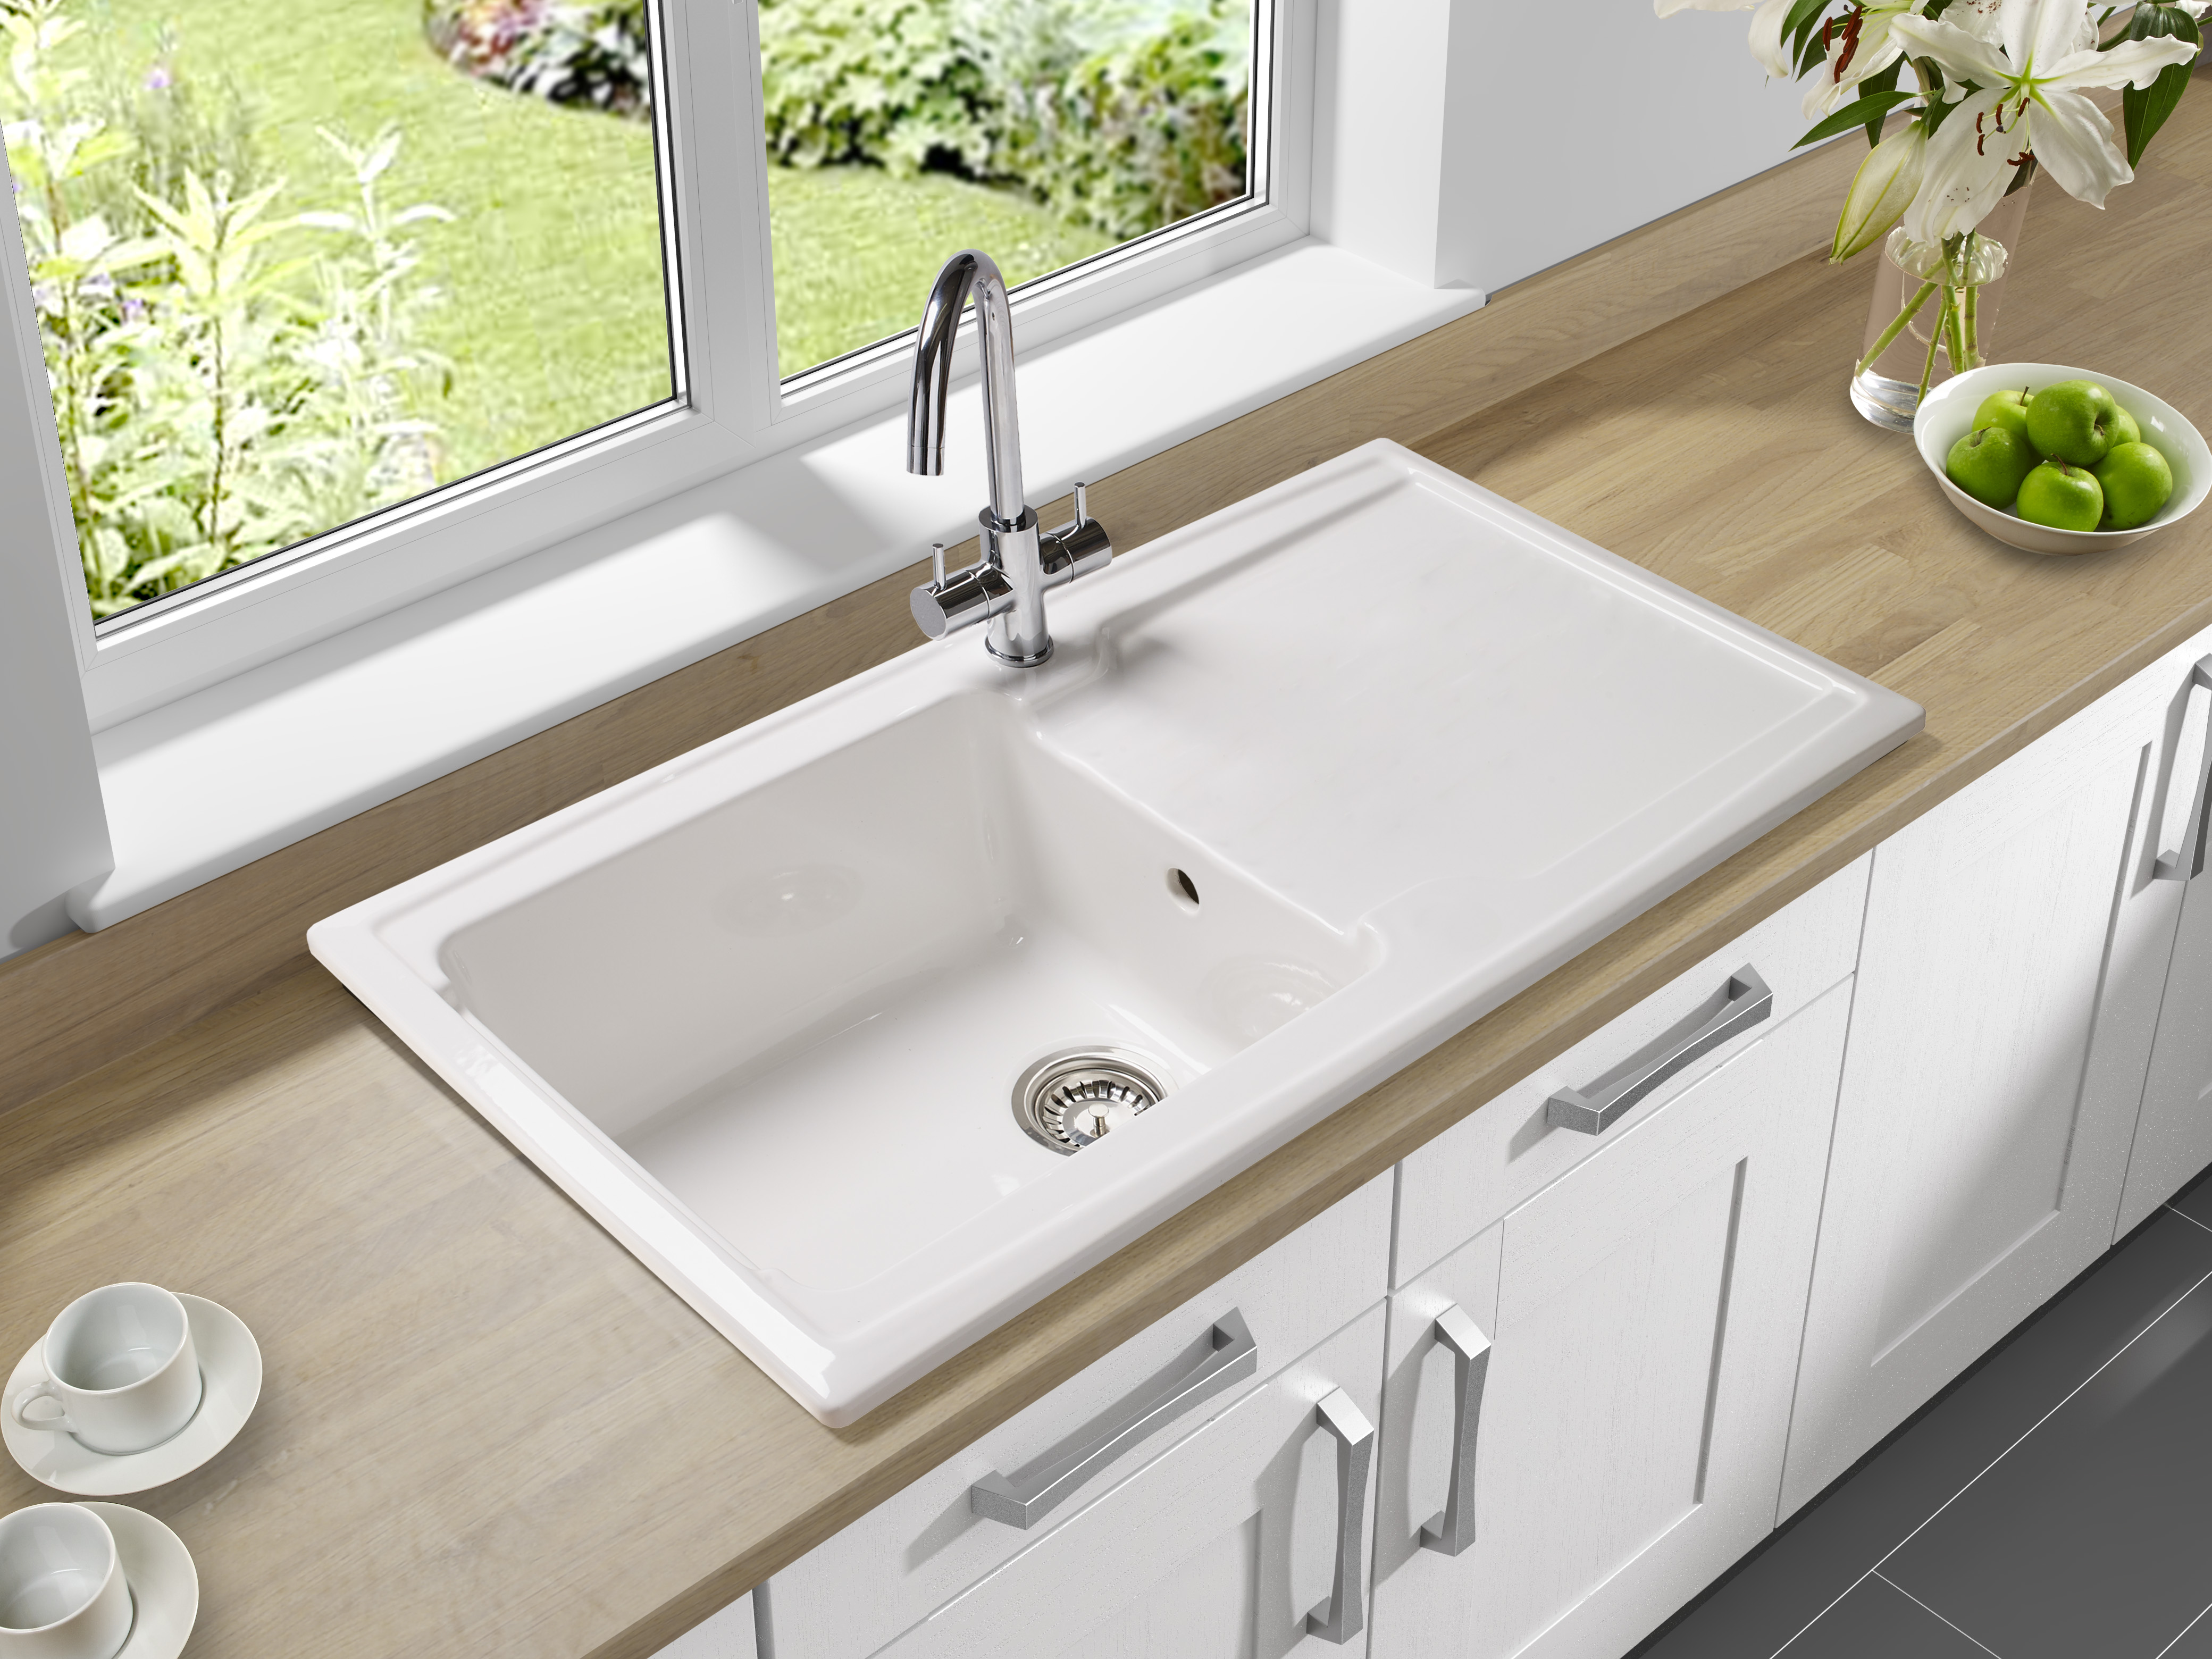 is ceramic sink good for kitchen